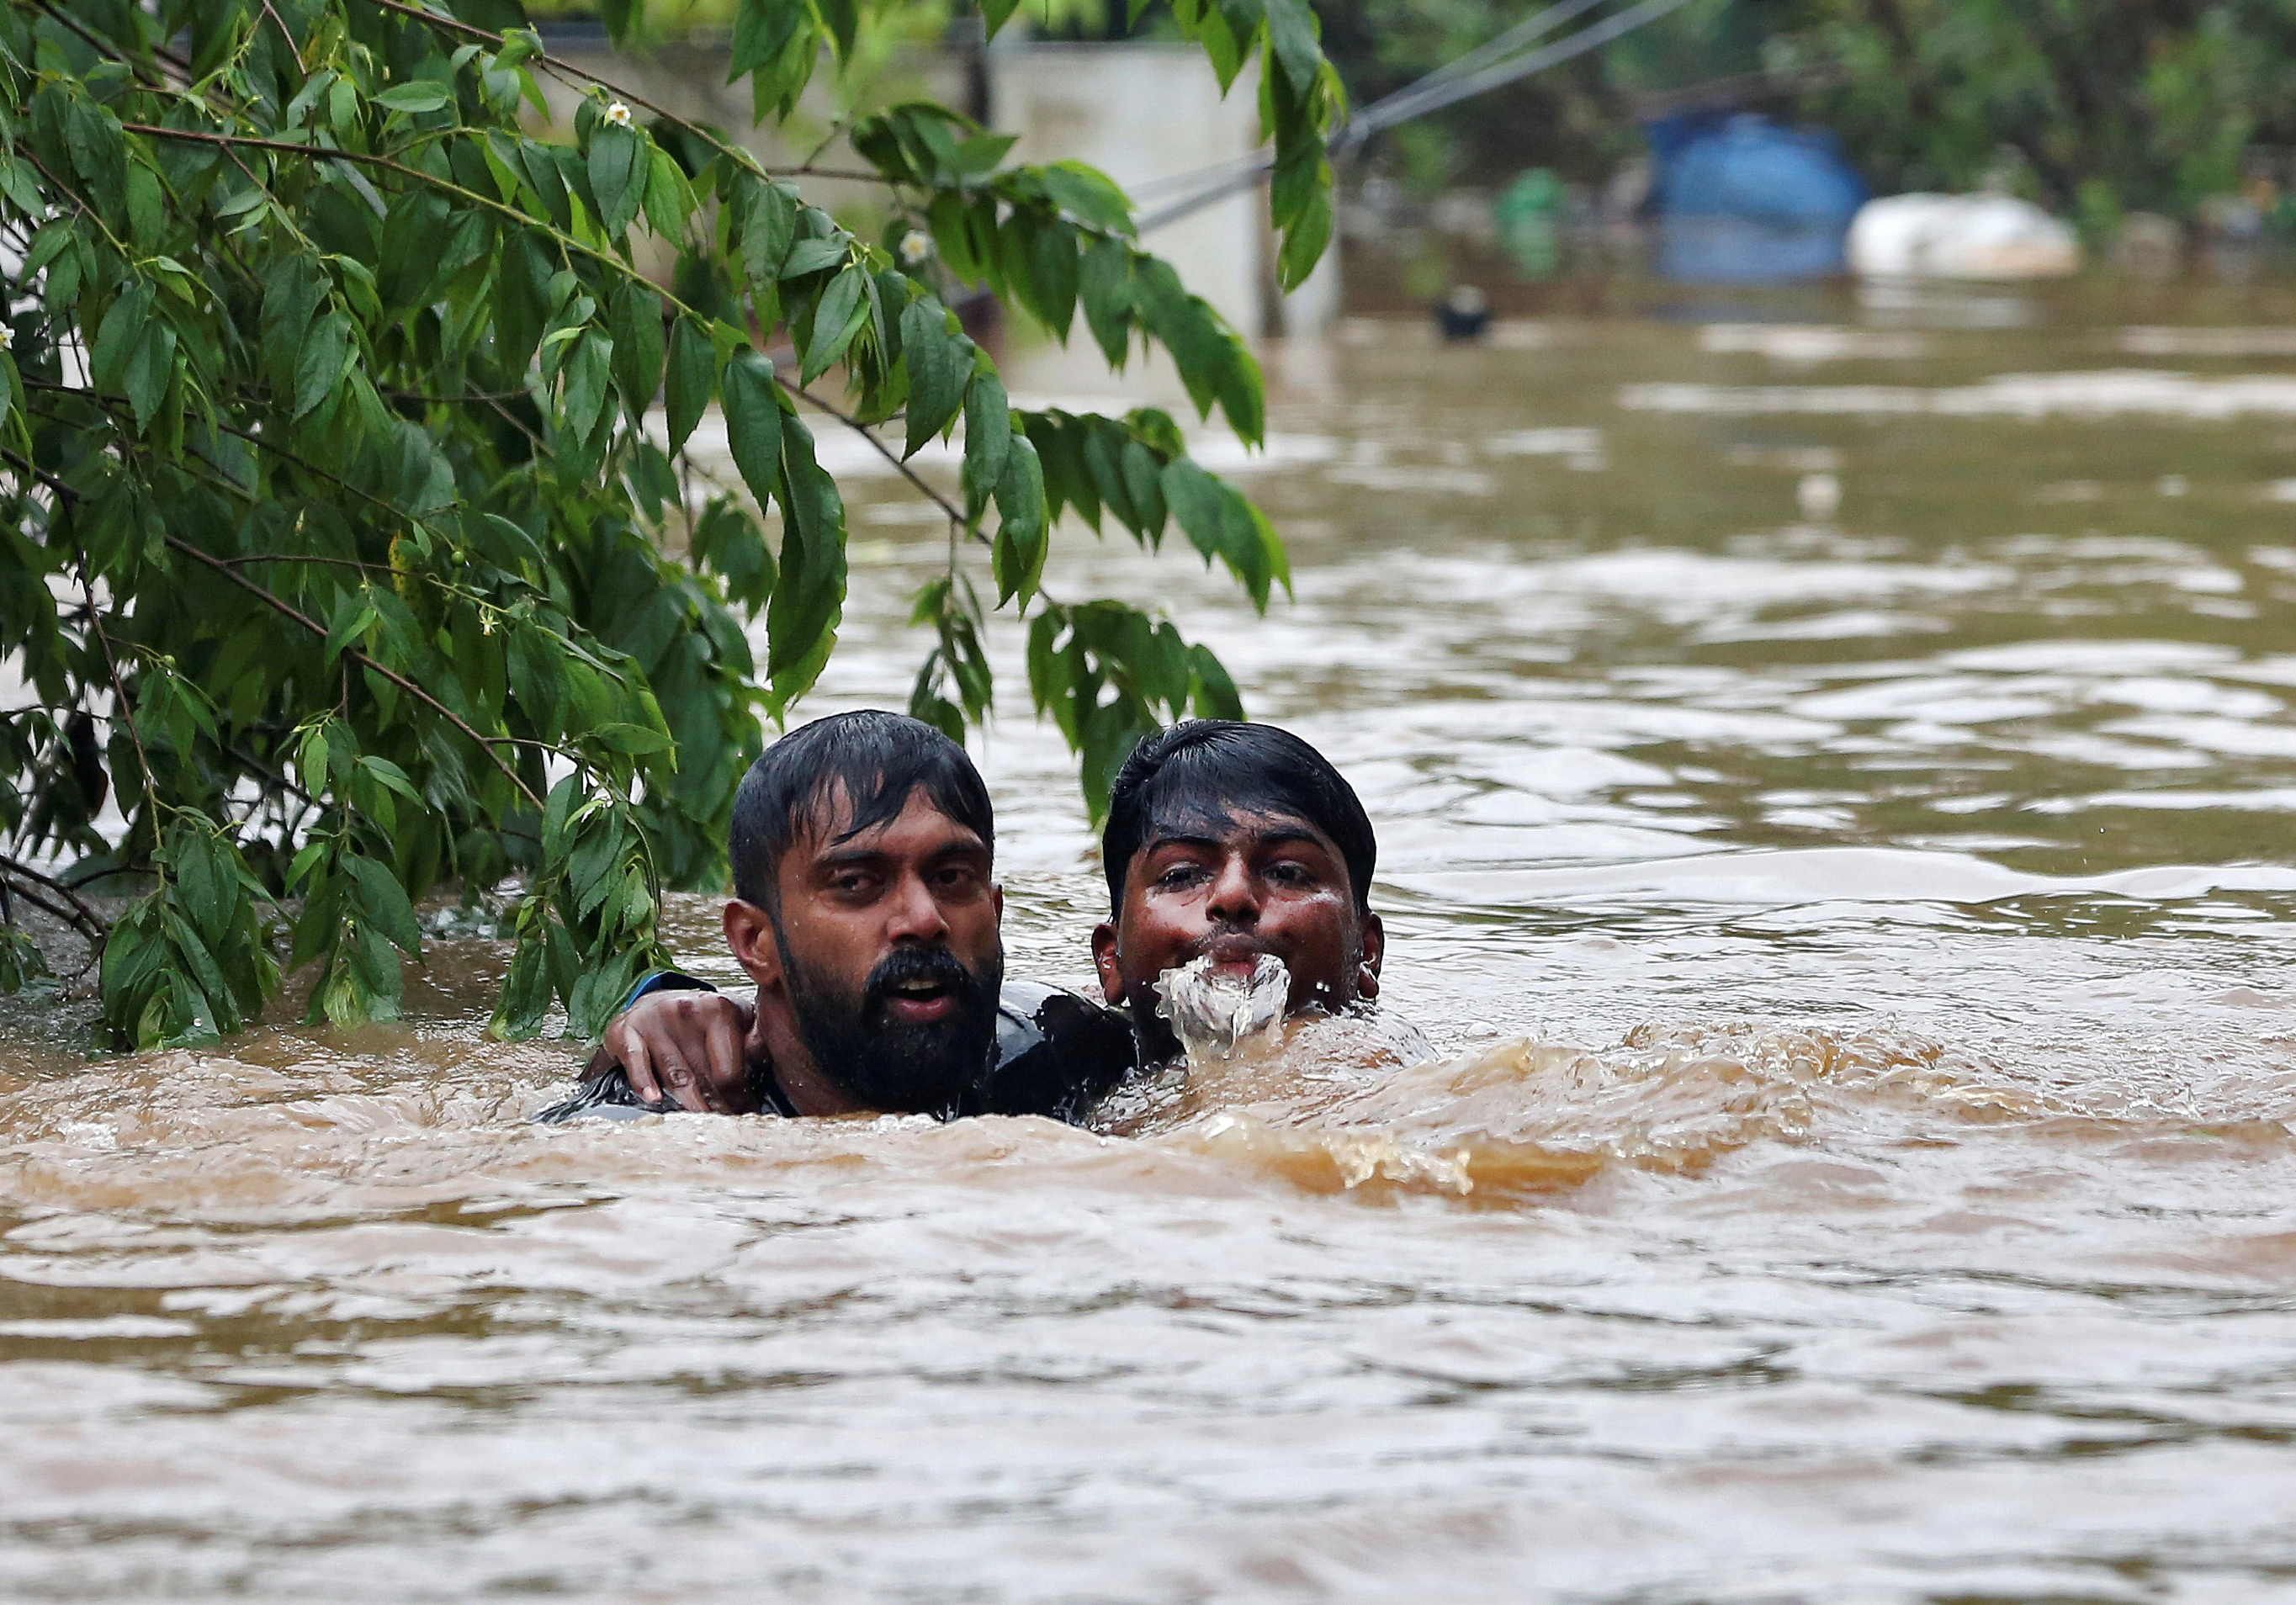 Indian church joins relief efforts as floods wreak havoc in Kerala